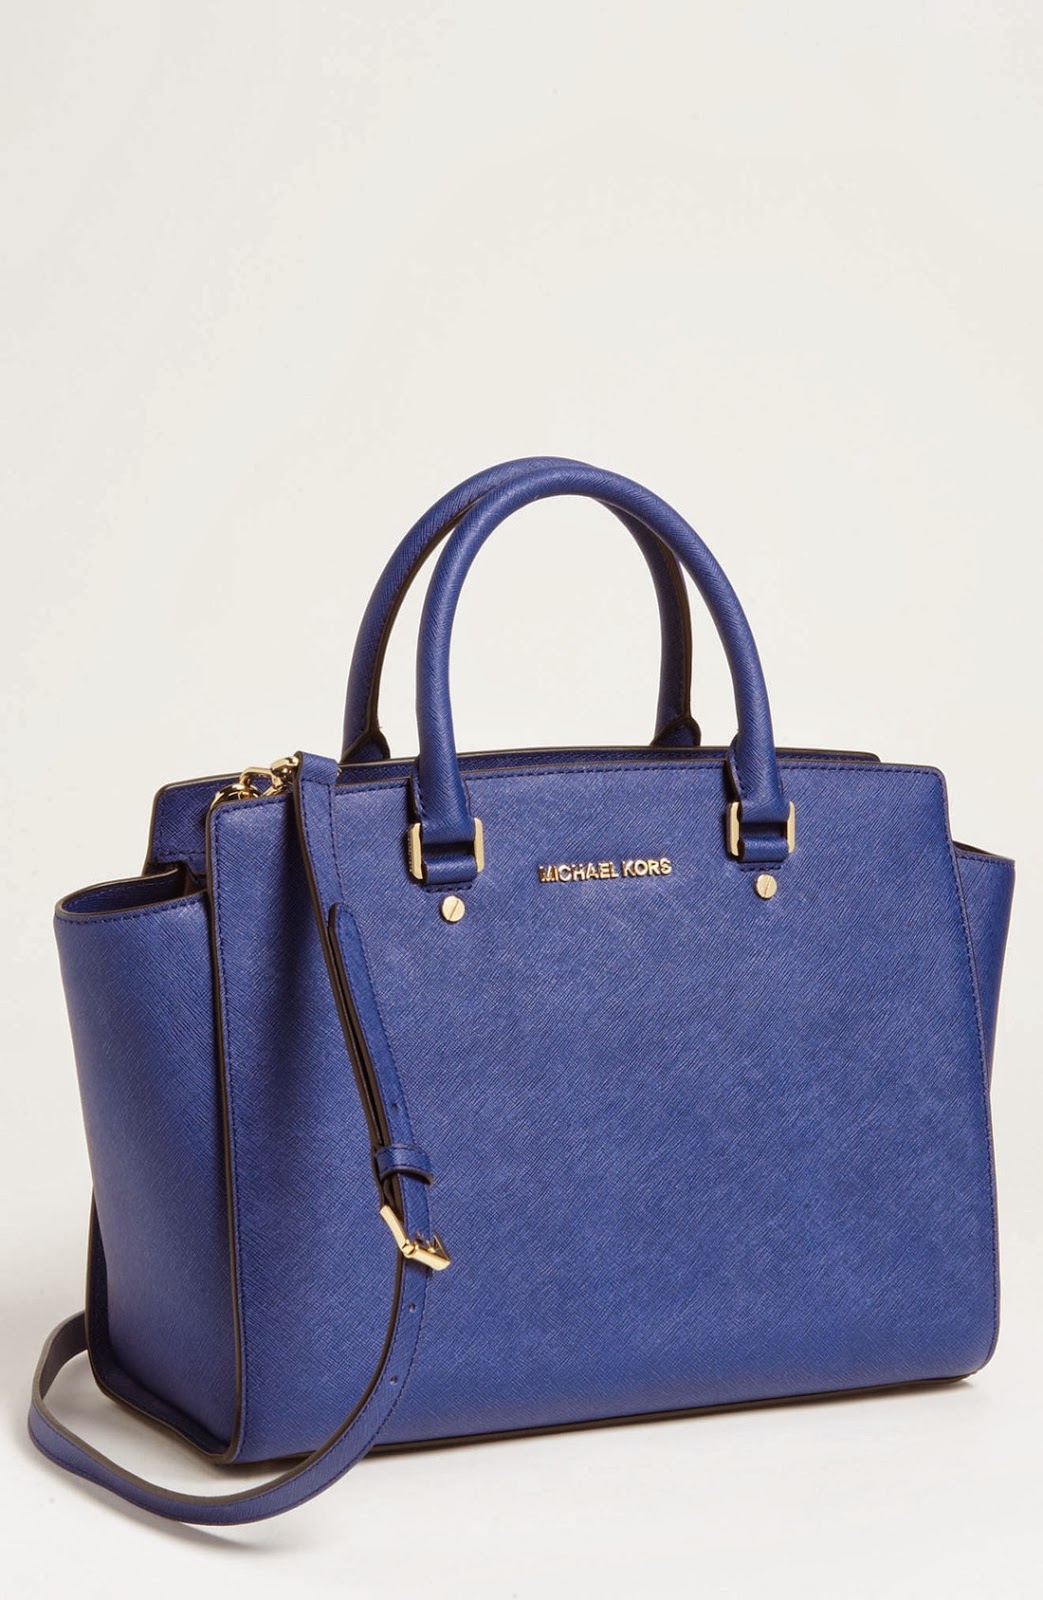 Authentic Bagz for SURE !!: MICHAEL KORS LARGE SELMA IN CADET BLUE ...